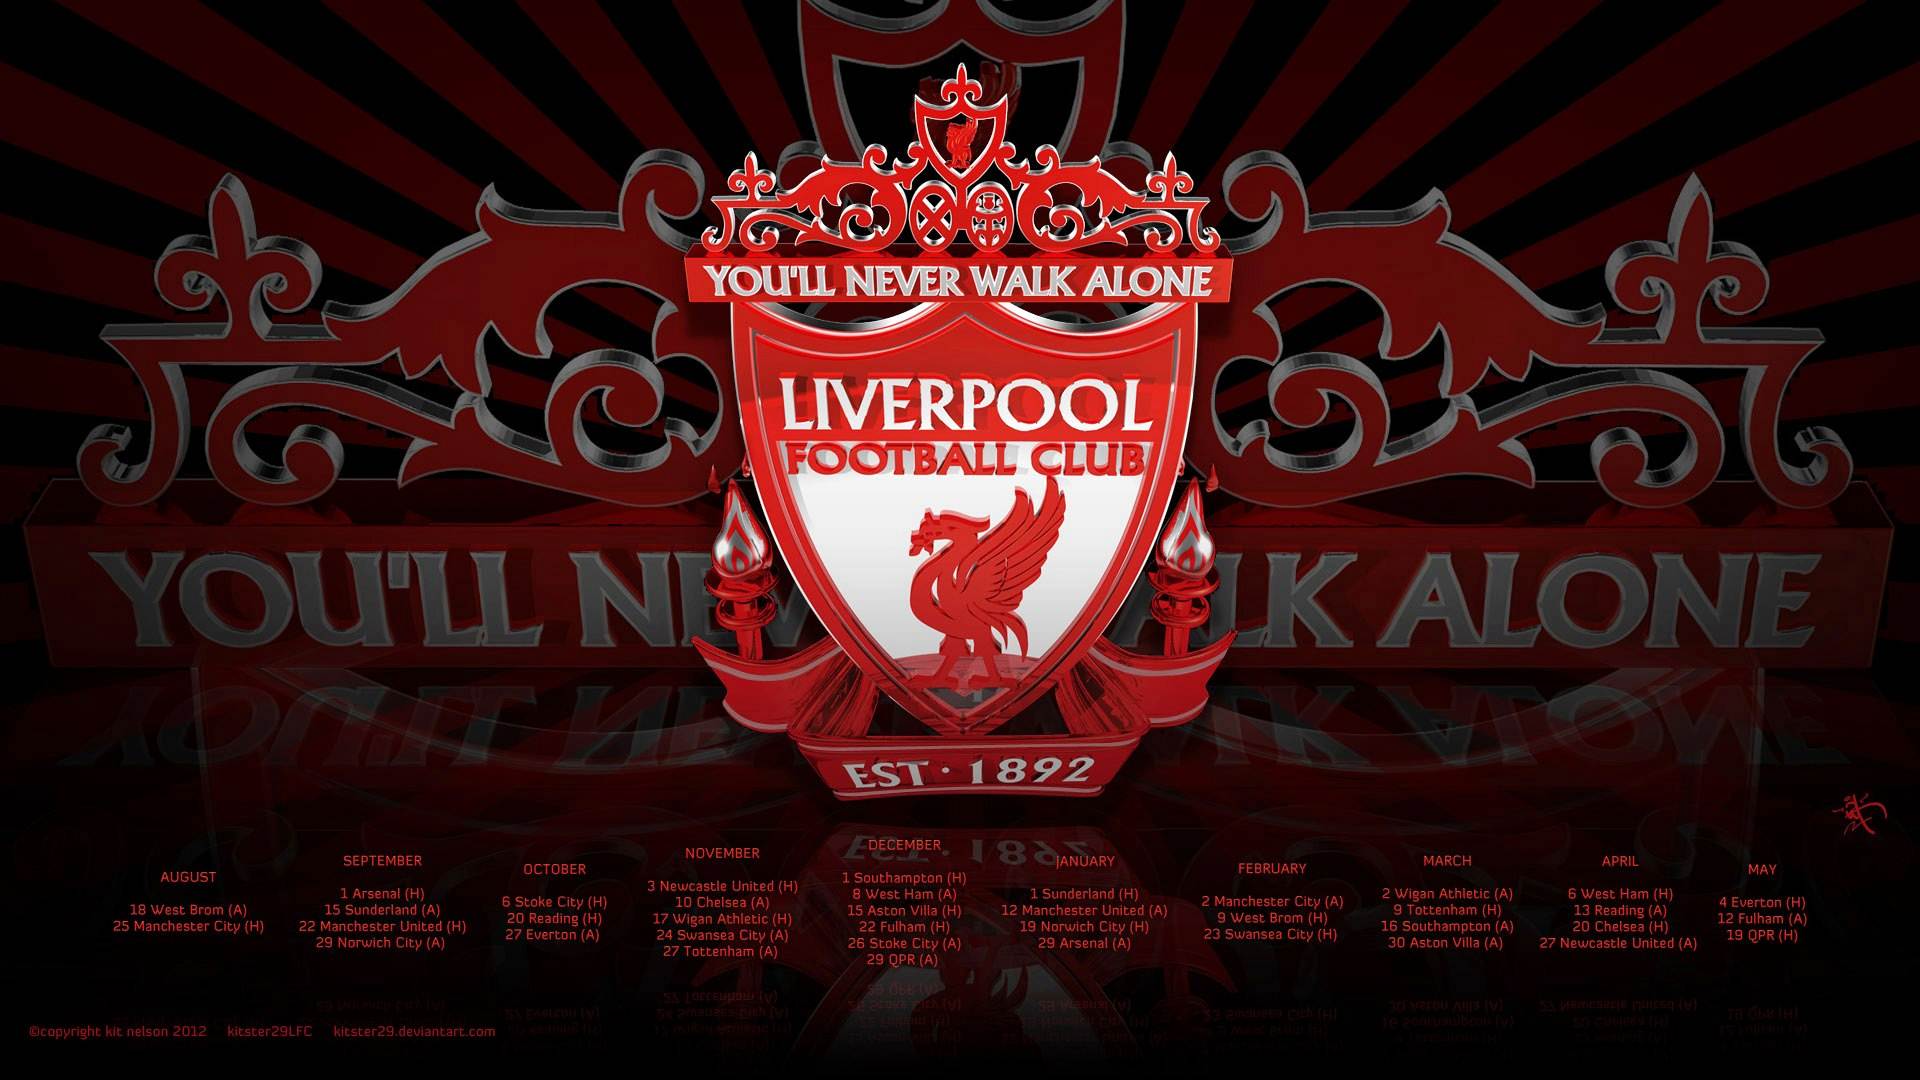 Liverpool Fc Image. Original FHDQ Wallpaper Collection